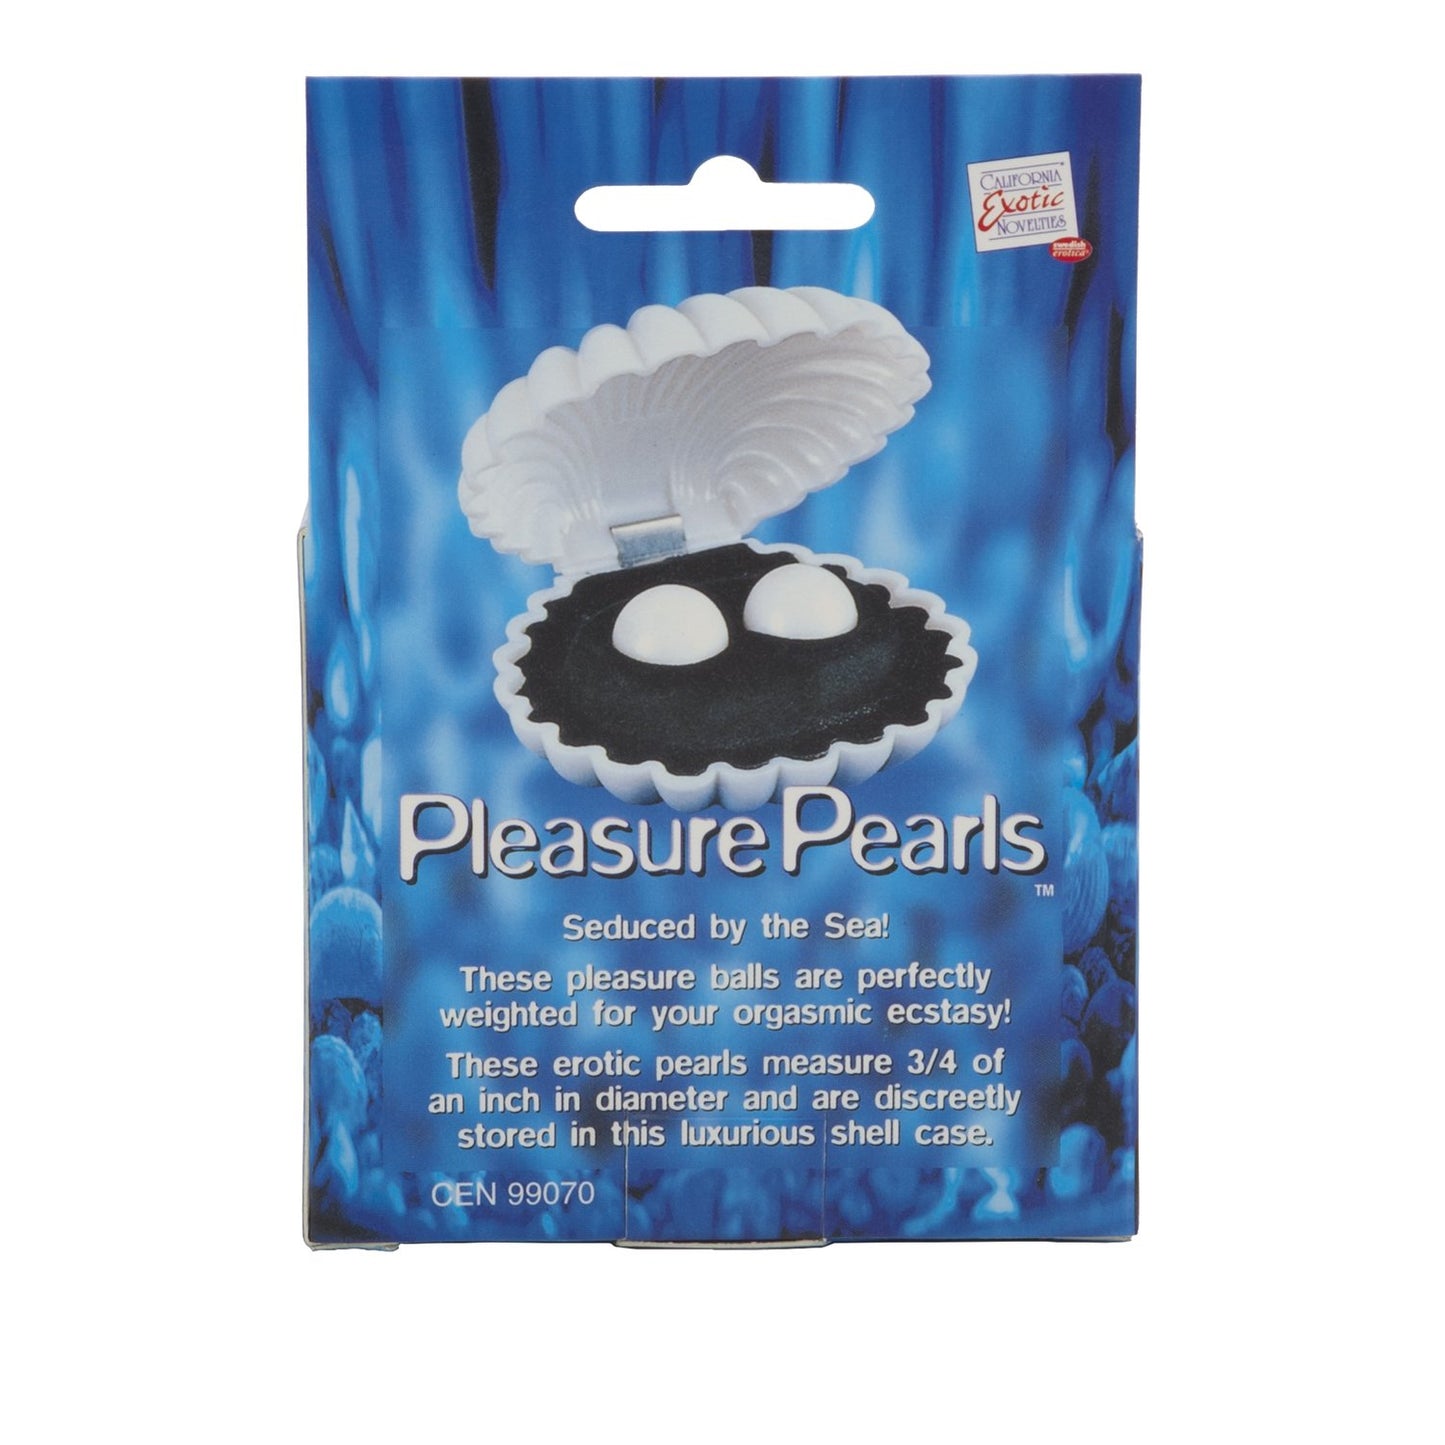 Pleasure Pearls